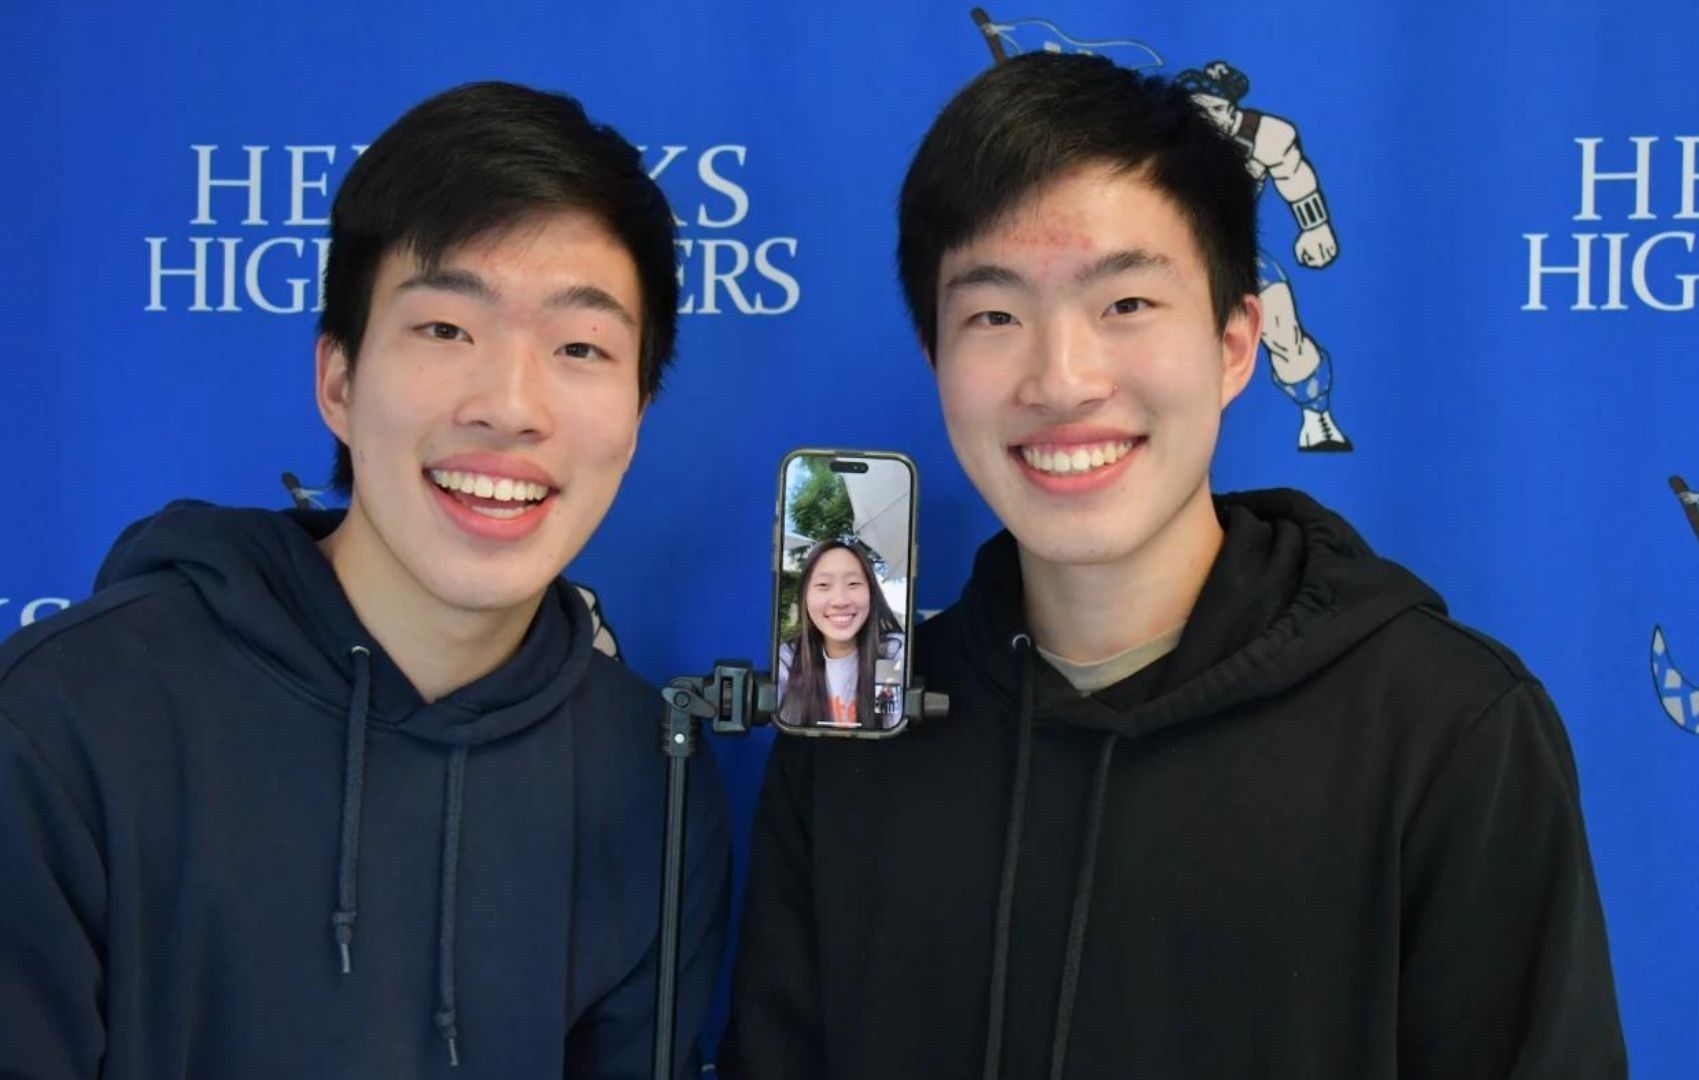 New York twins finish HS valedictorian and salutatorian